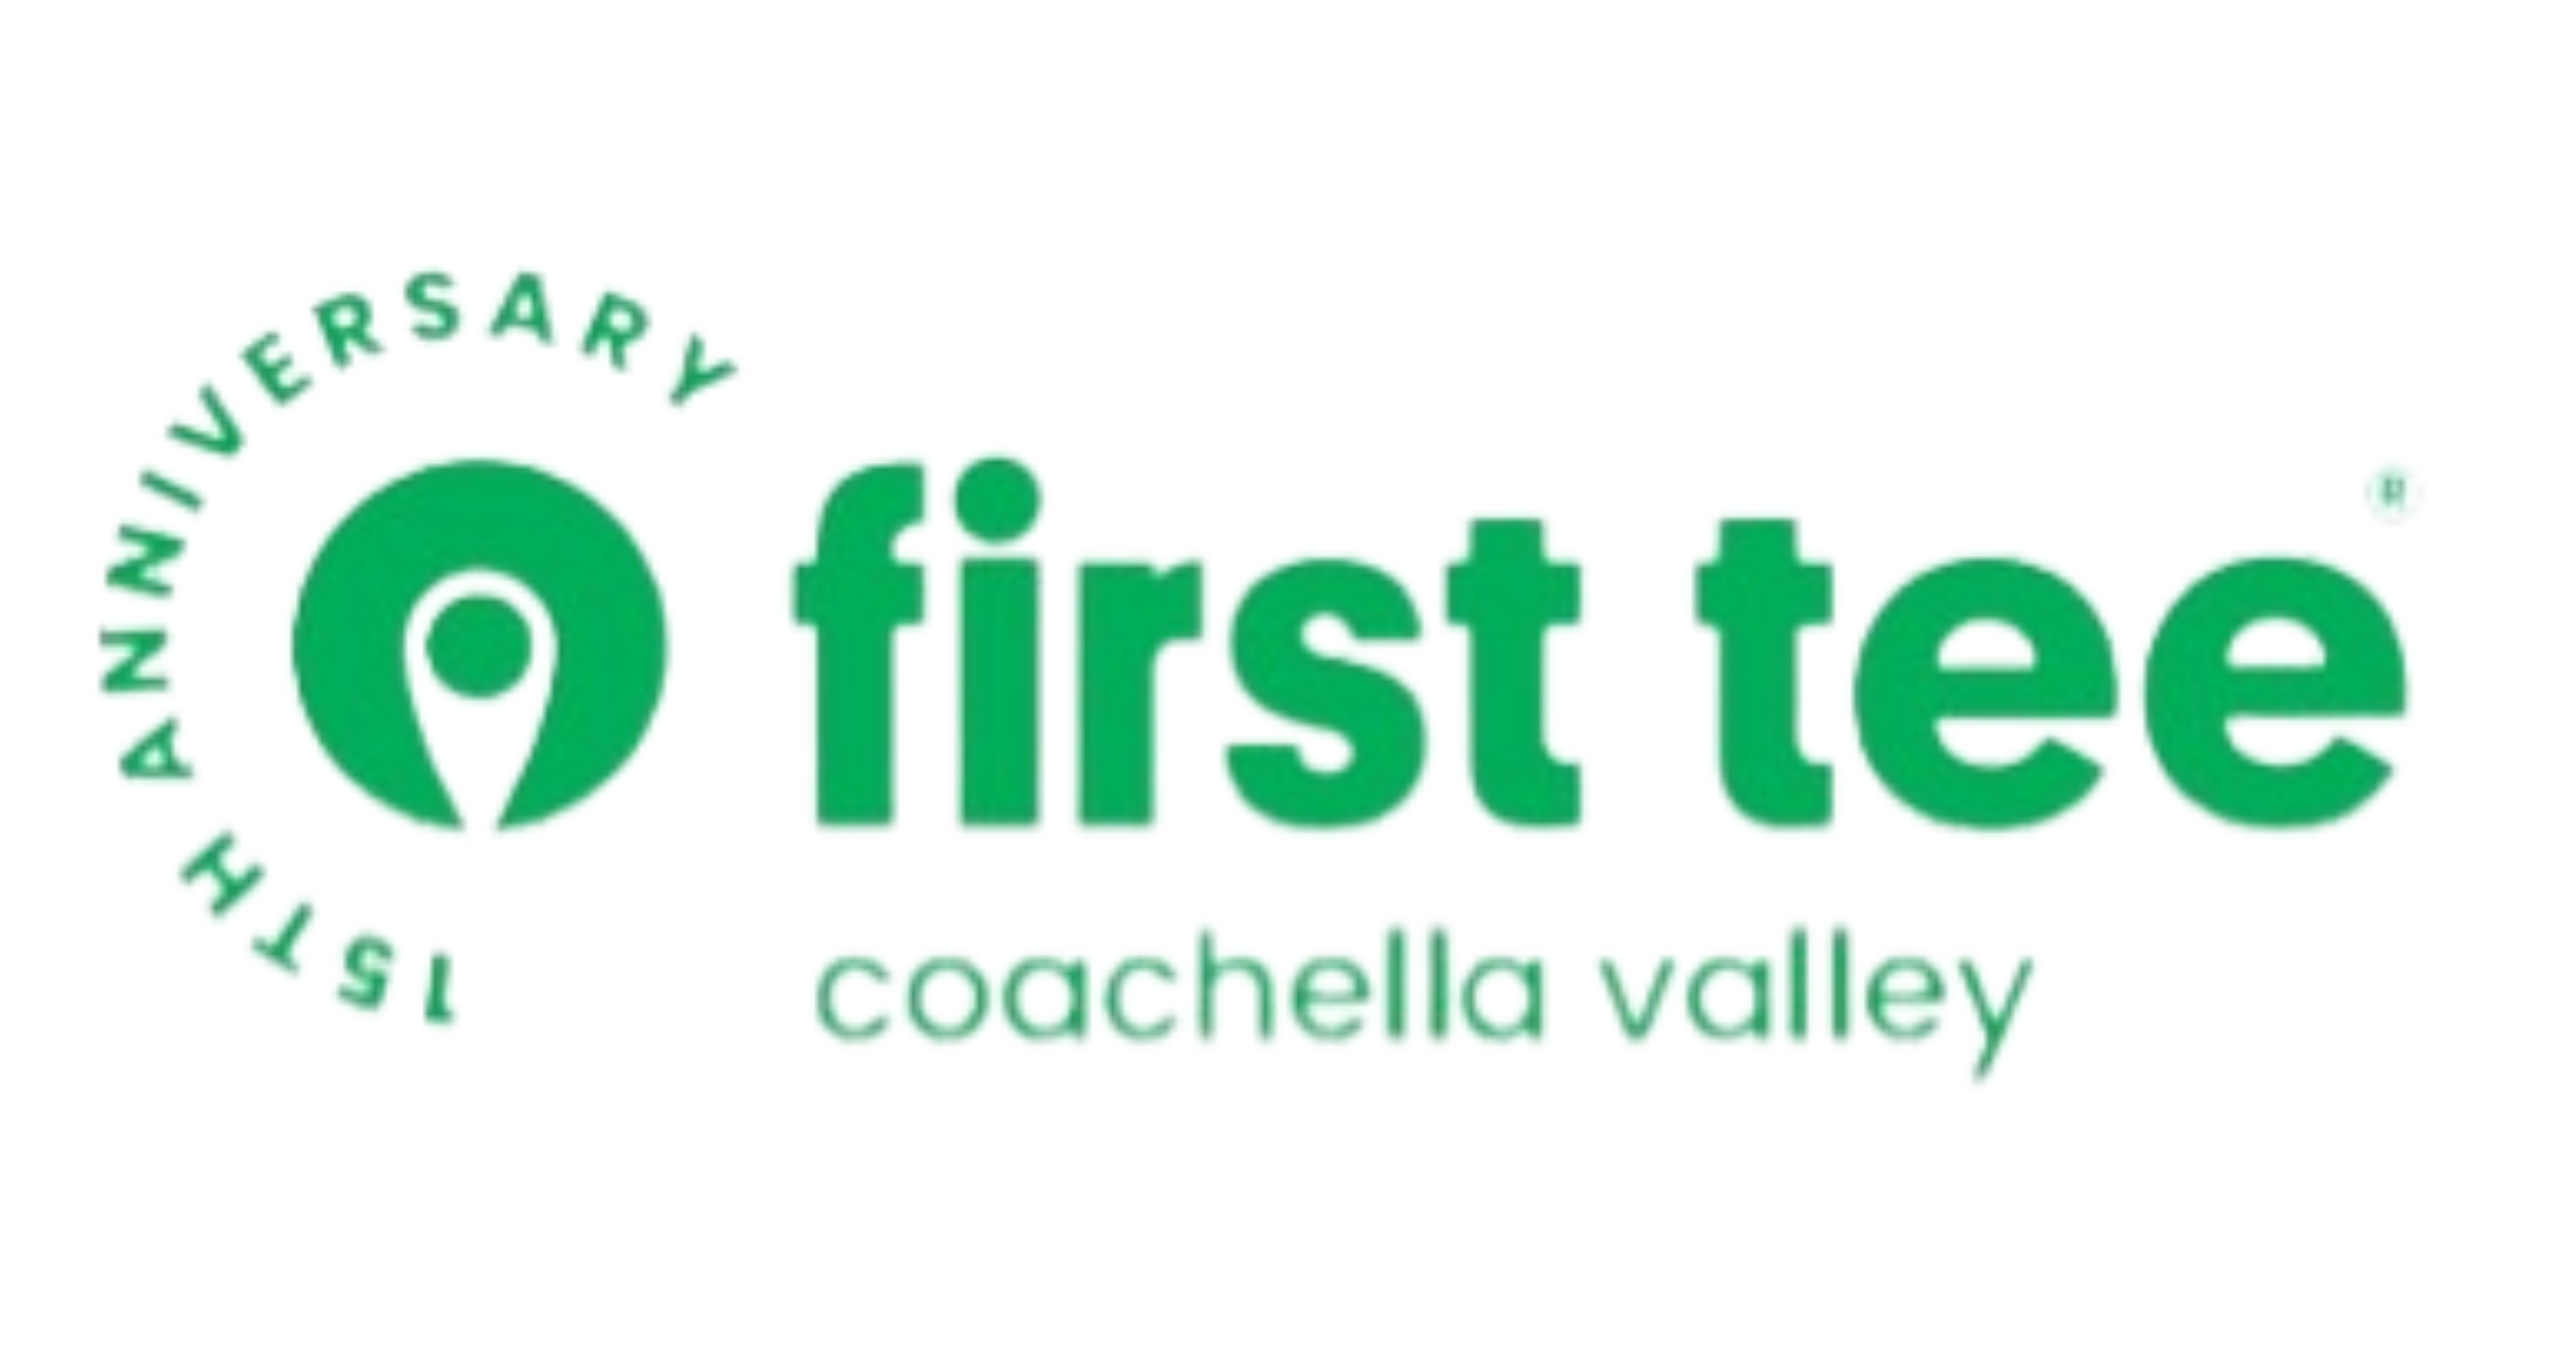 First Tee – Coachella Valley